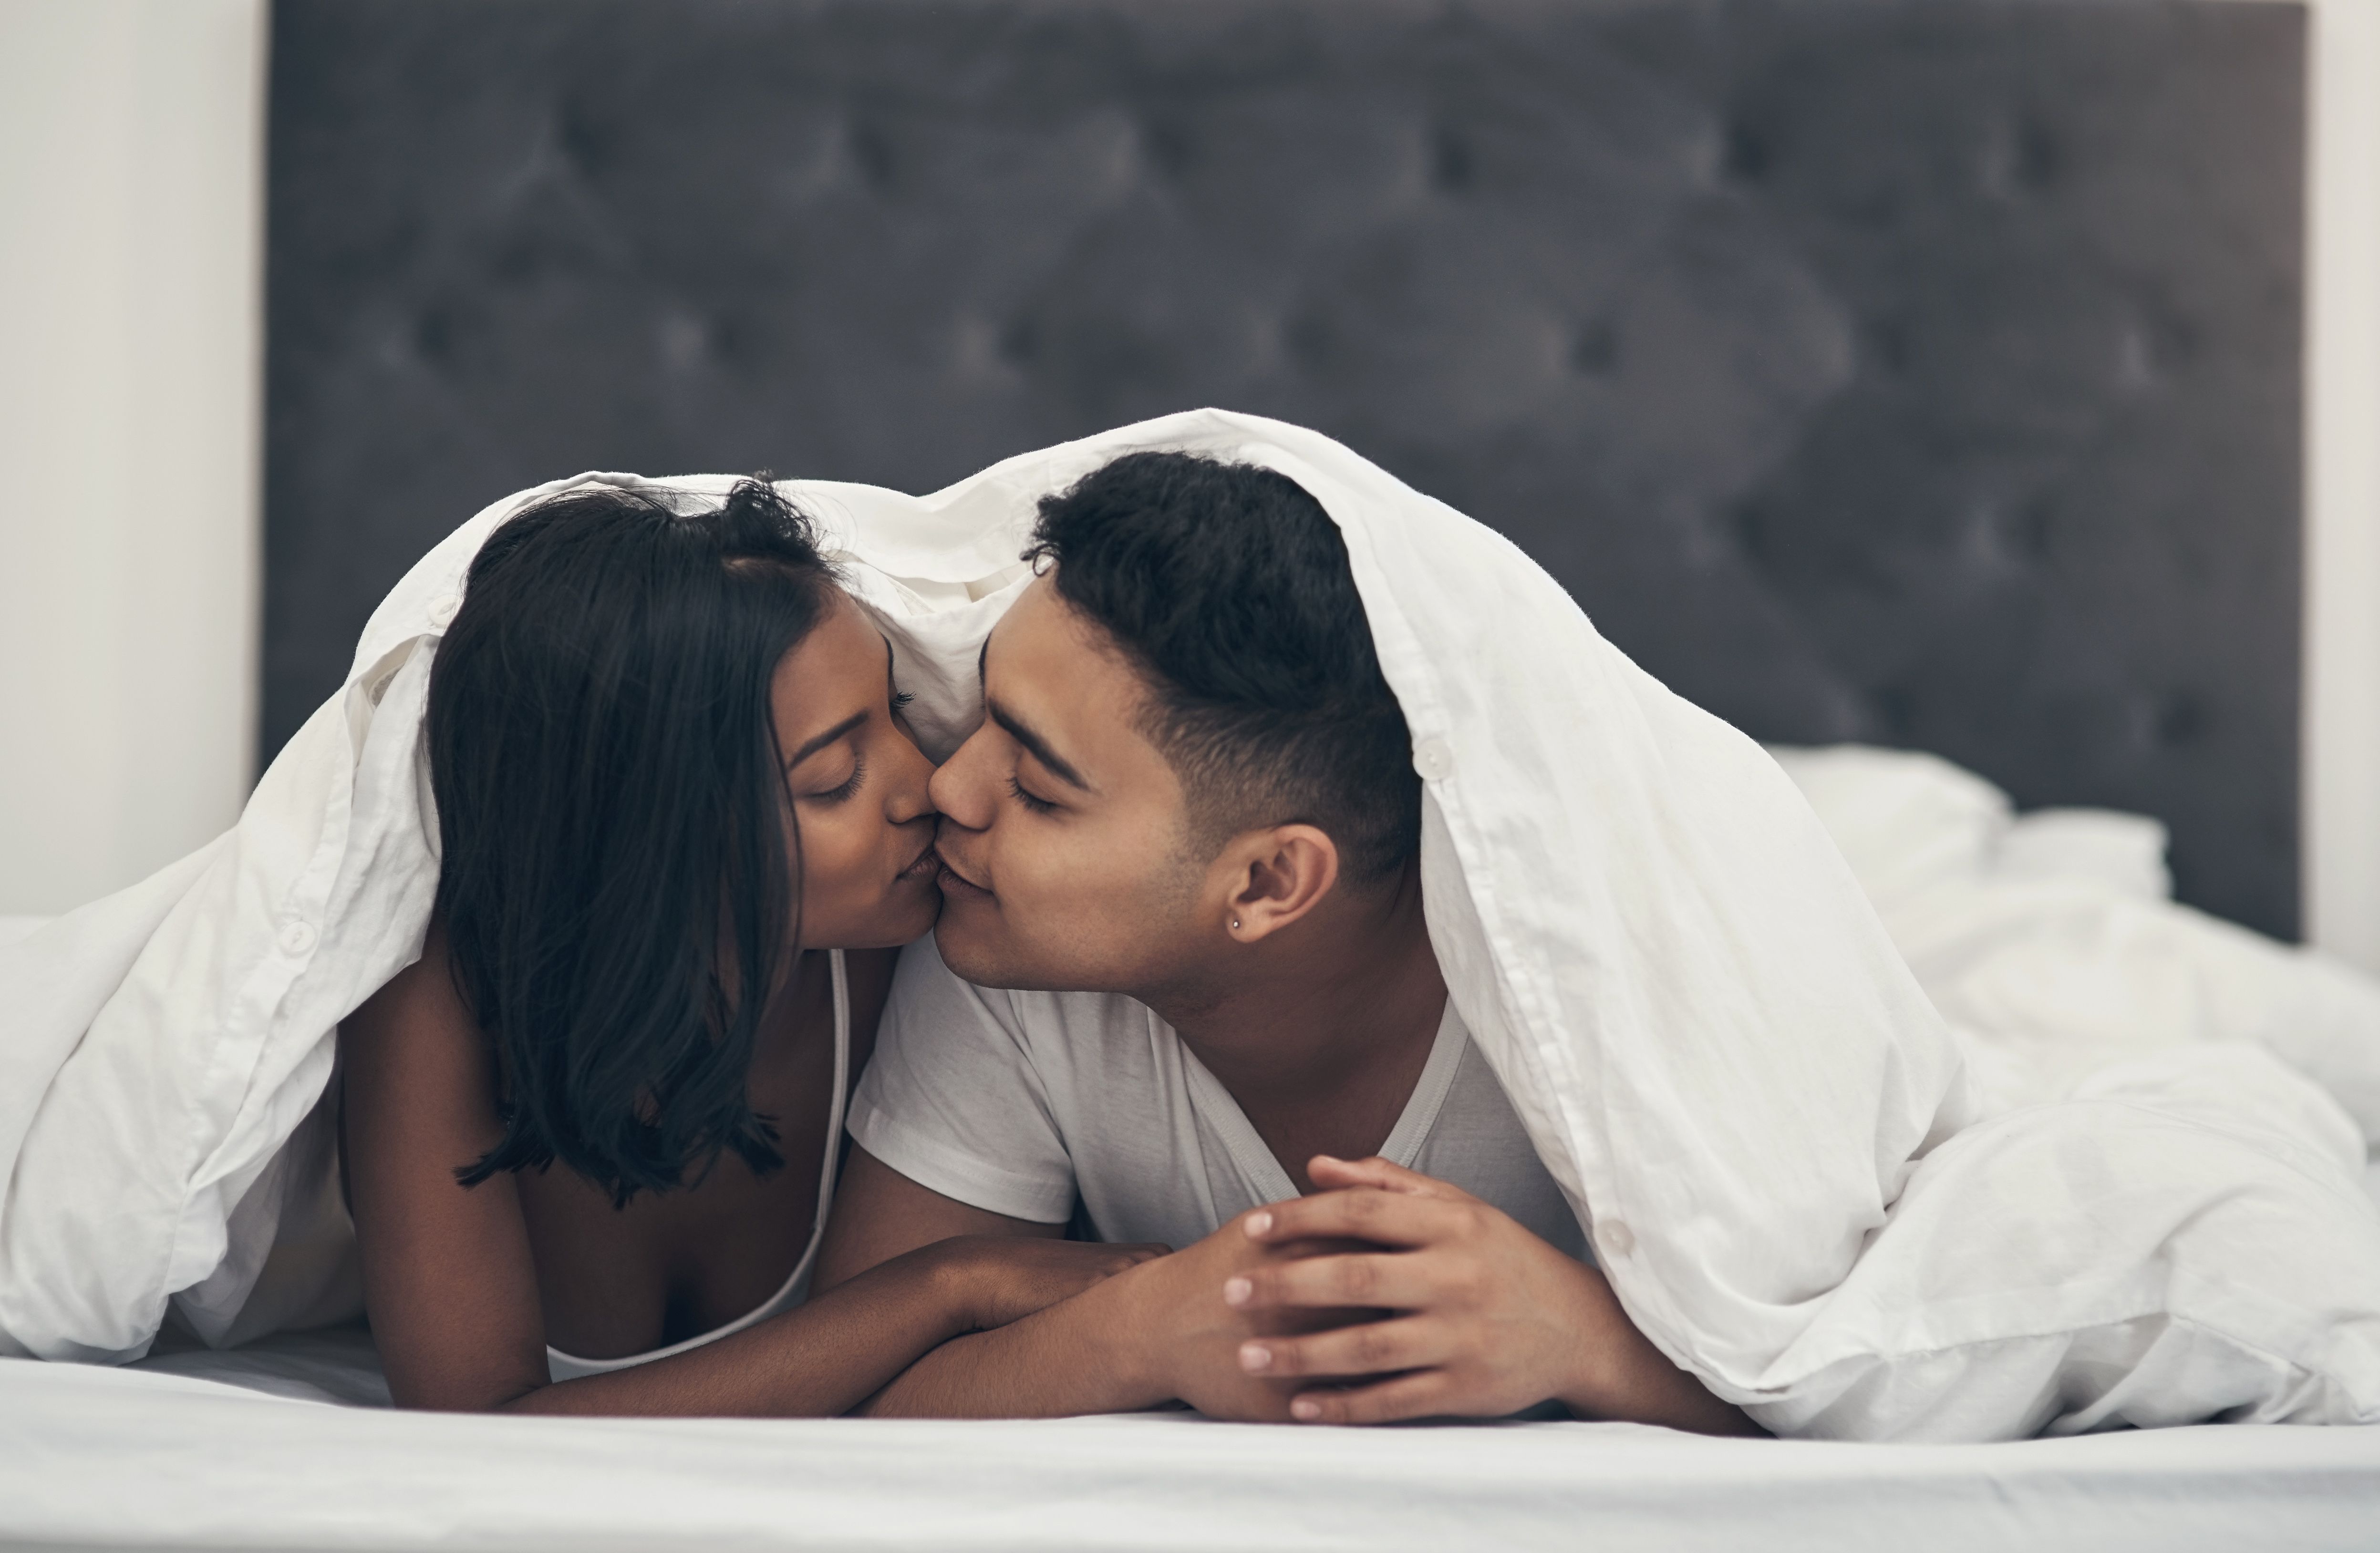 Interracial Sex Positions - 6 Easy Sex Positions - Beginner Sex Positions You'll Love